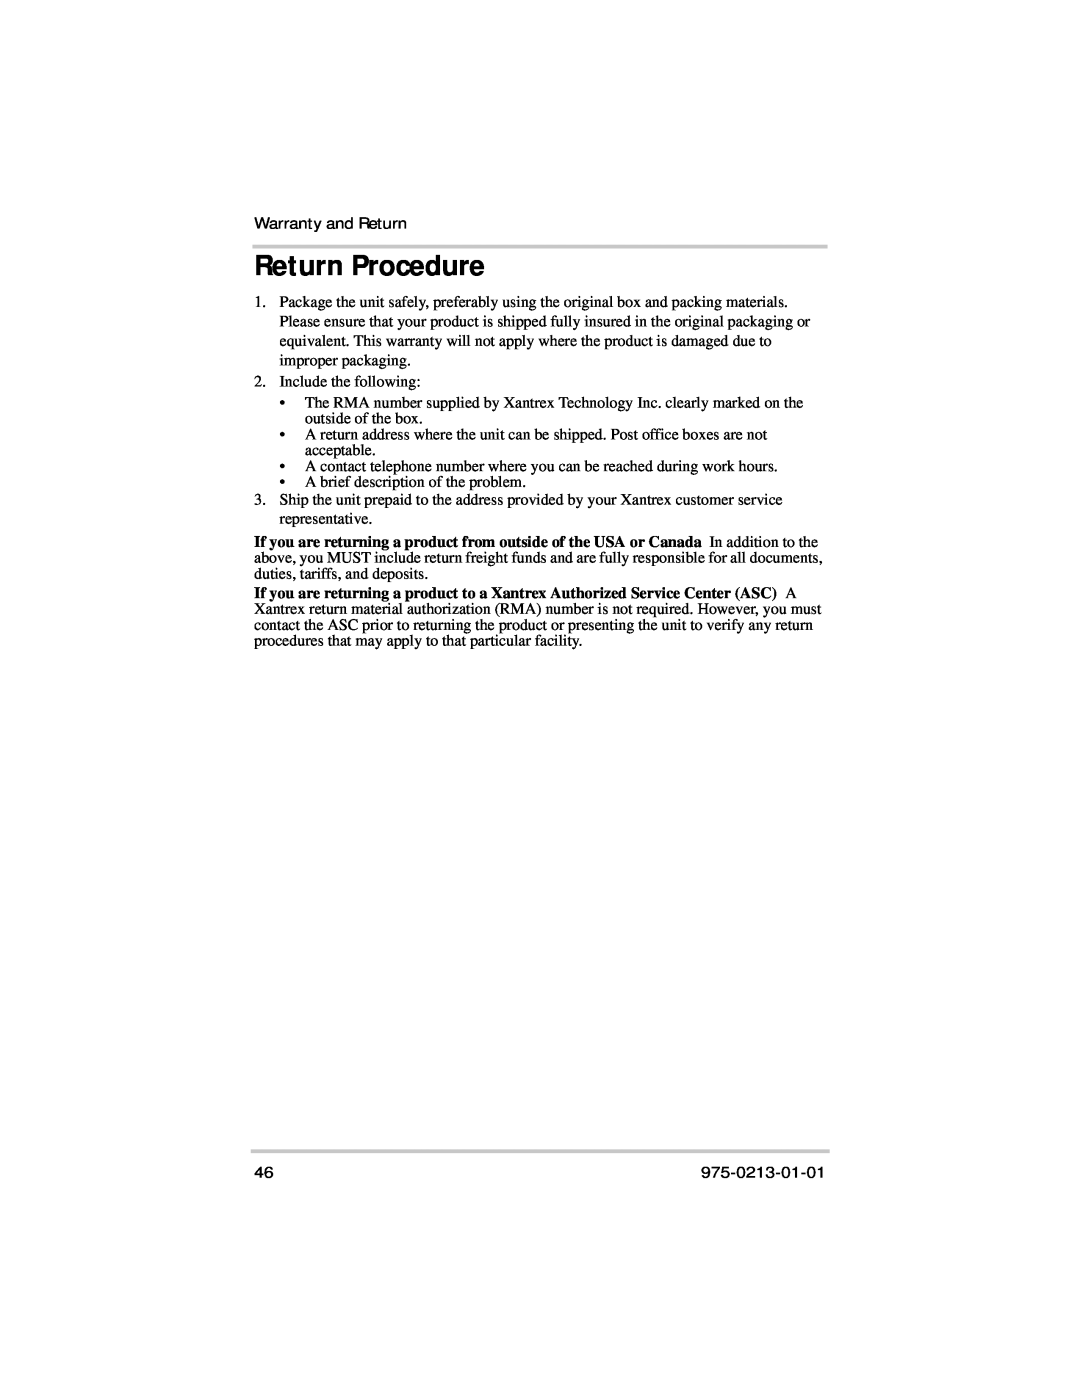 Xantrex Technology 600HD manual Return Procedure, Warranty and Return, 975-0213-01-01 